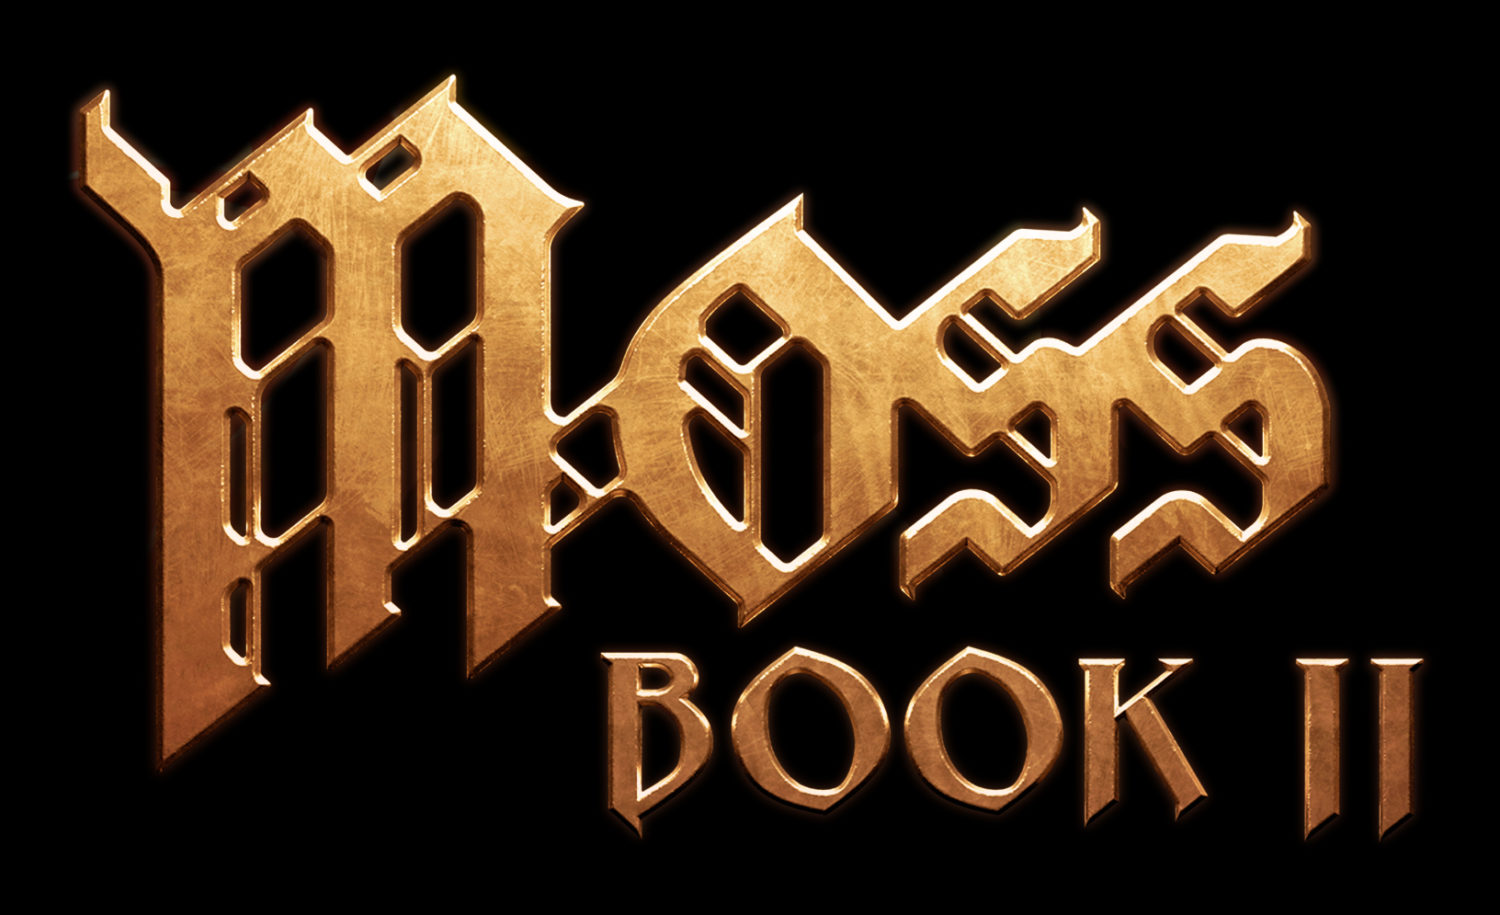 moss book 2 update